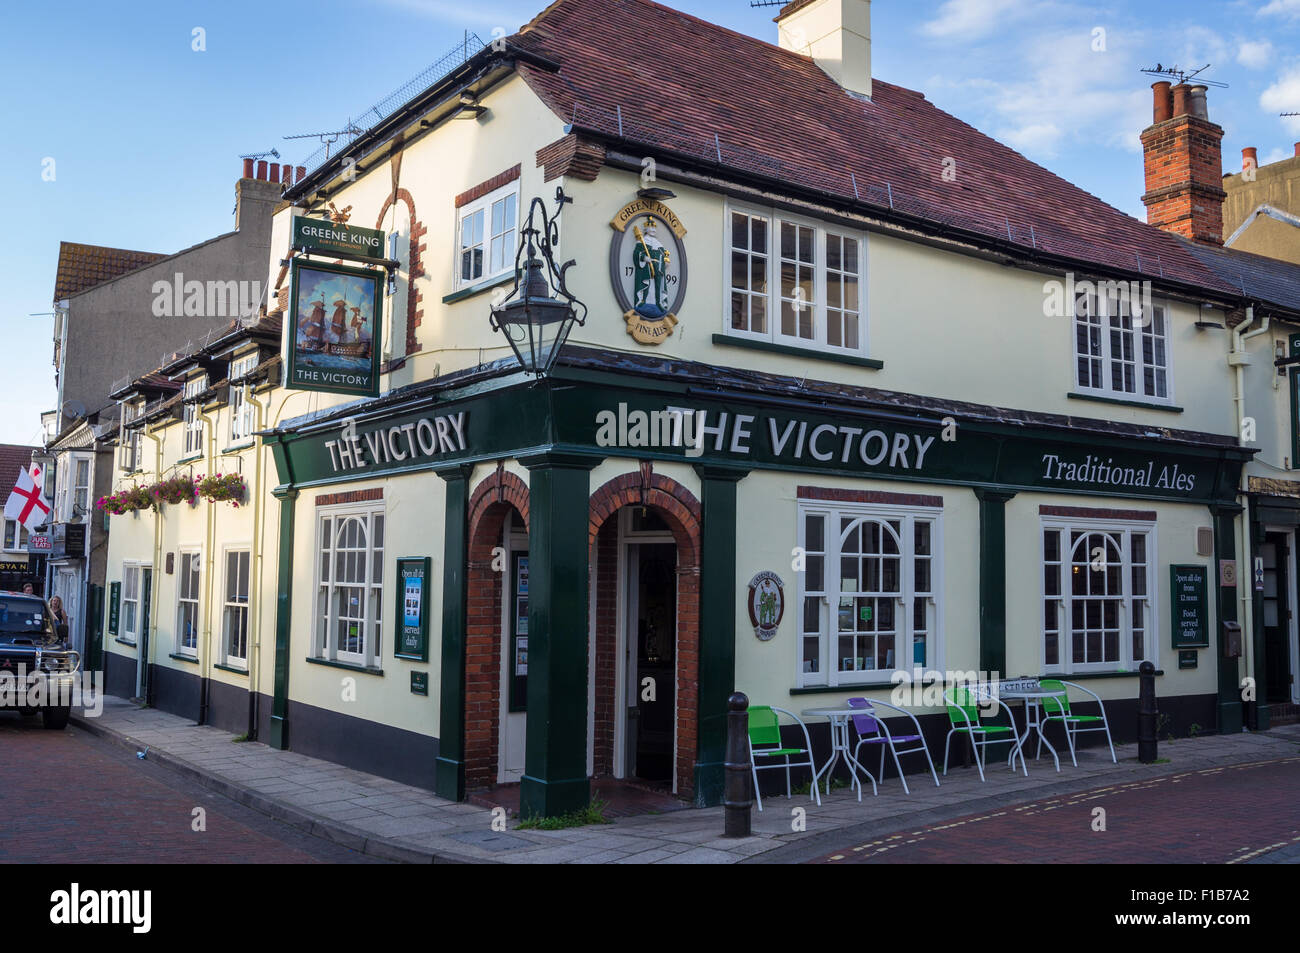 Exterior of 'The Victory' Greene King pub, Walton on the Naze, Essex, England, UK Stock Photo